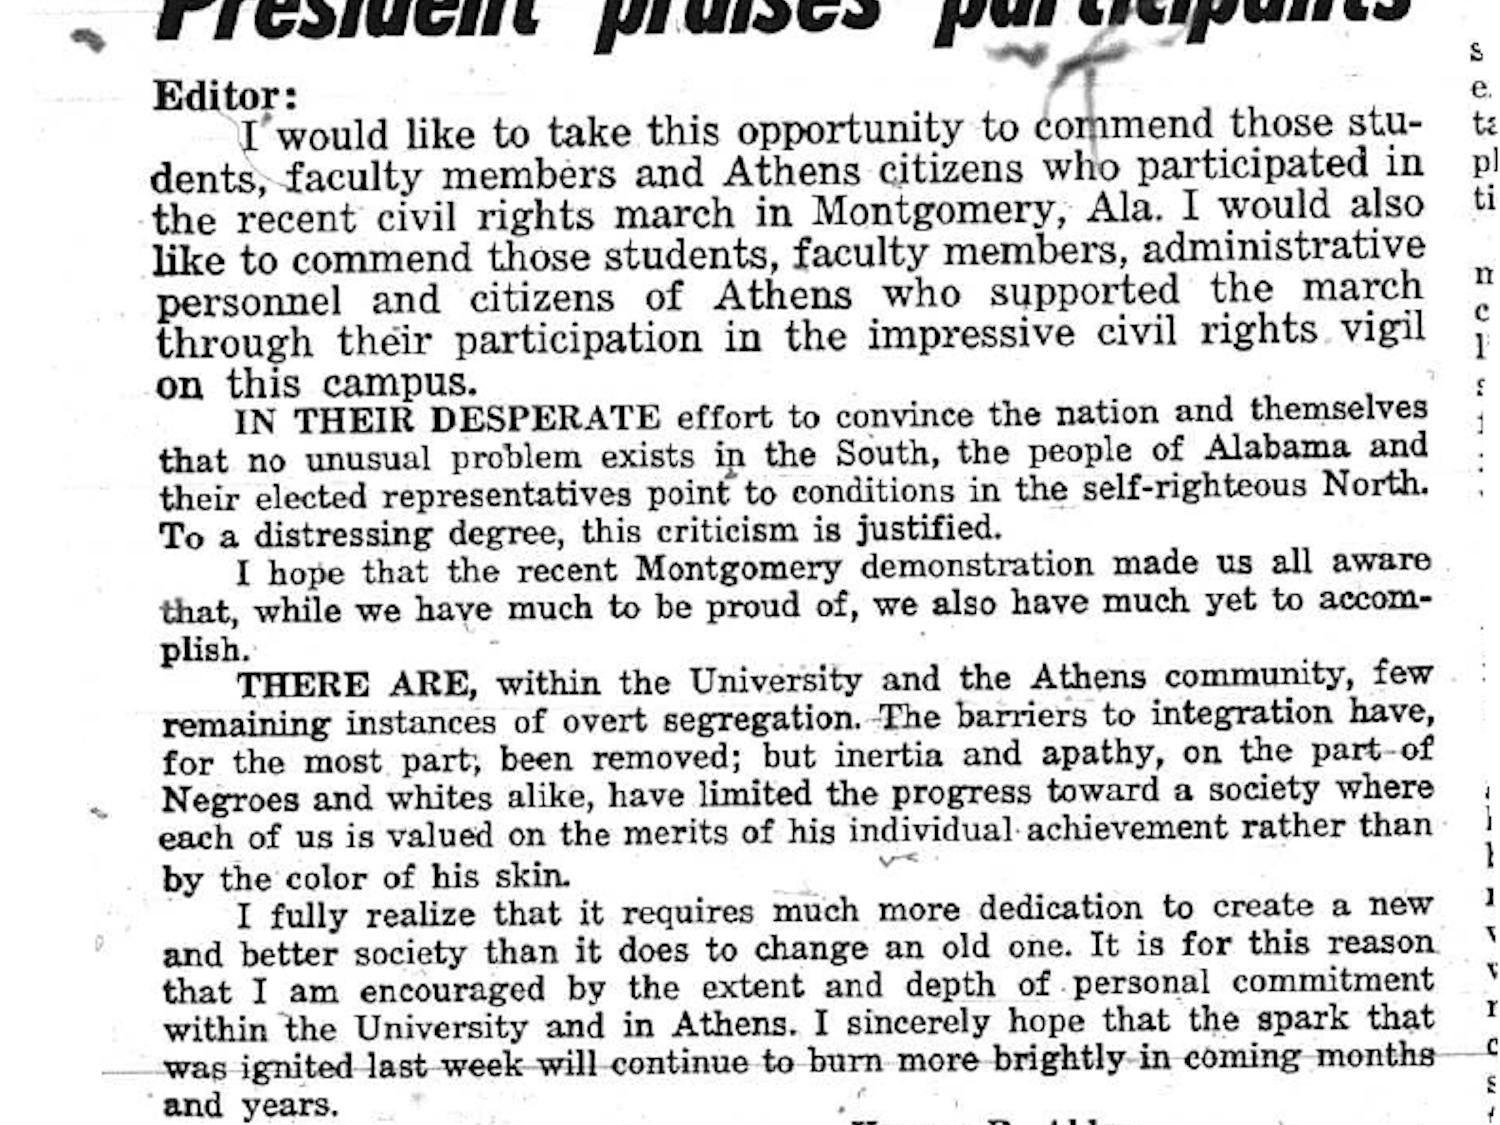 Former university president Vernon Alden praised OU participants in civil rights march  